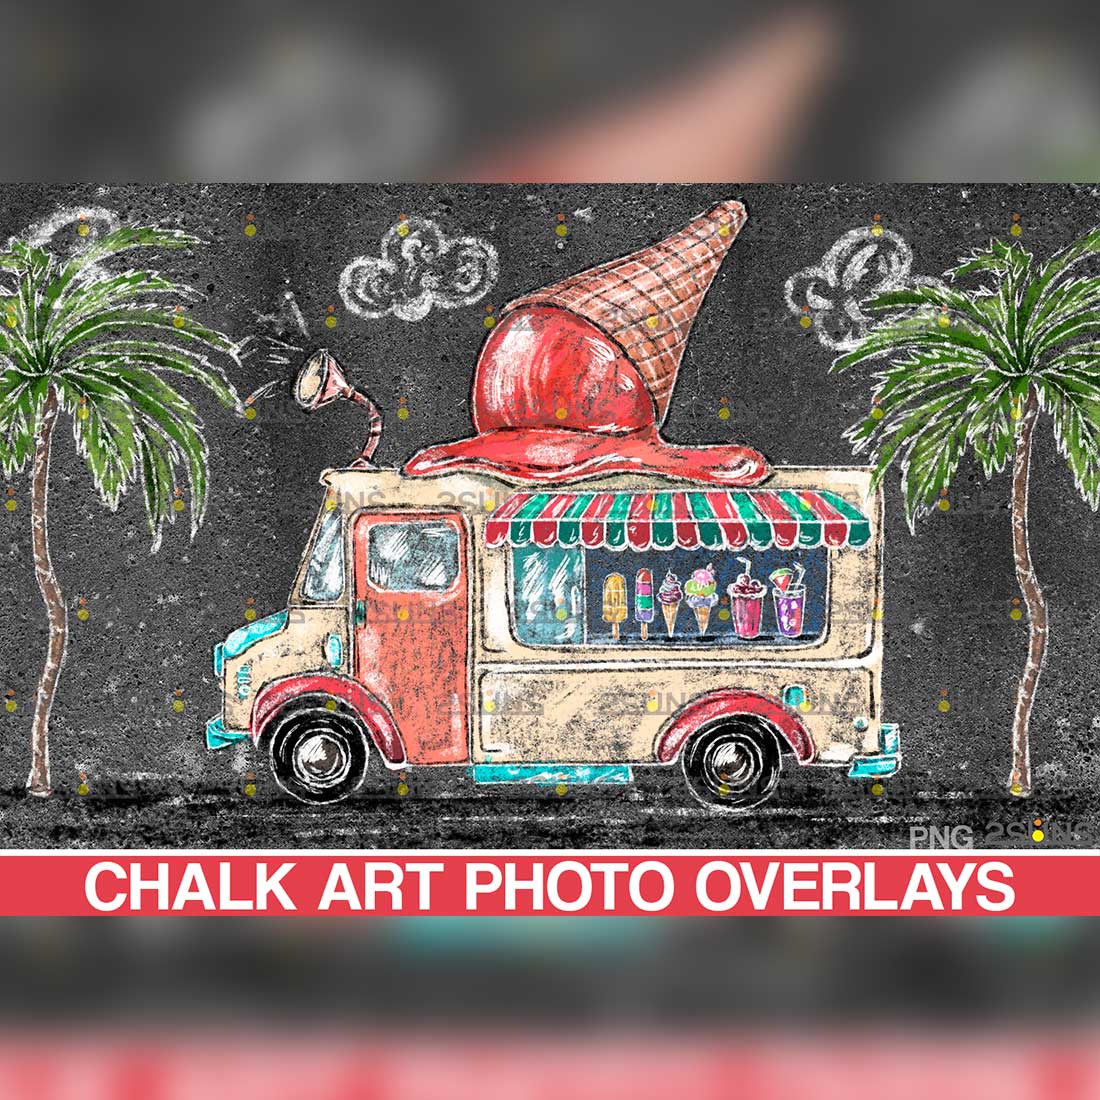 Ice Cream Chalk Art Photoshop Overlay cover image.